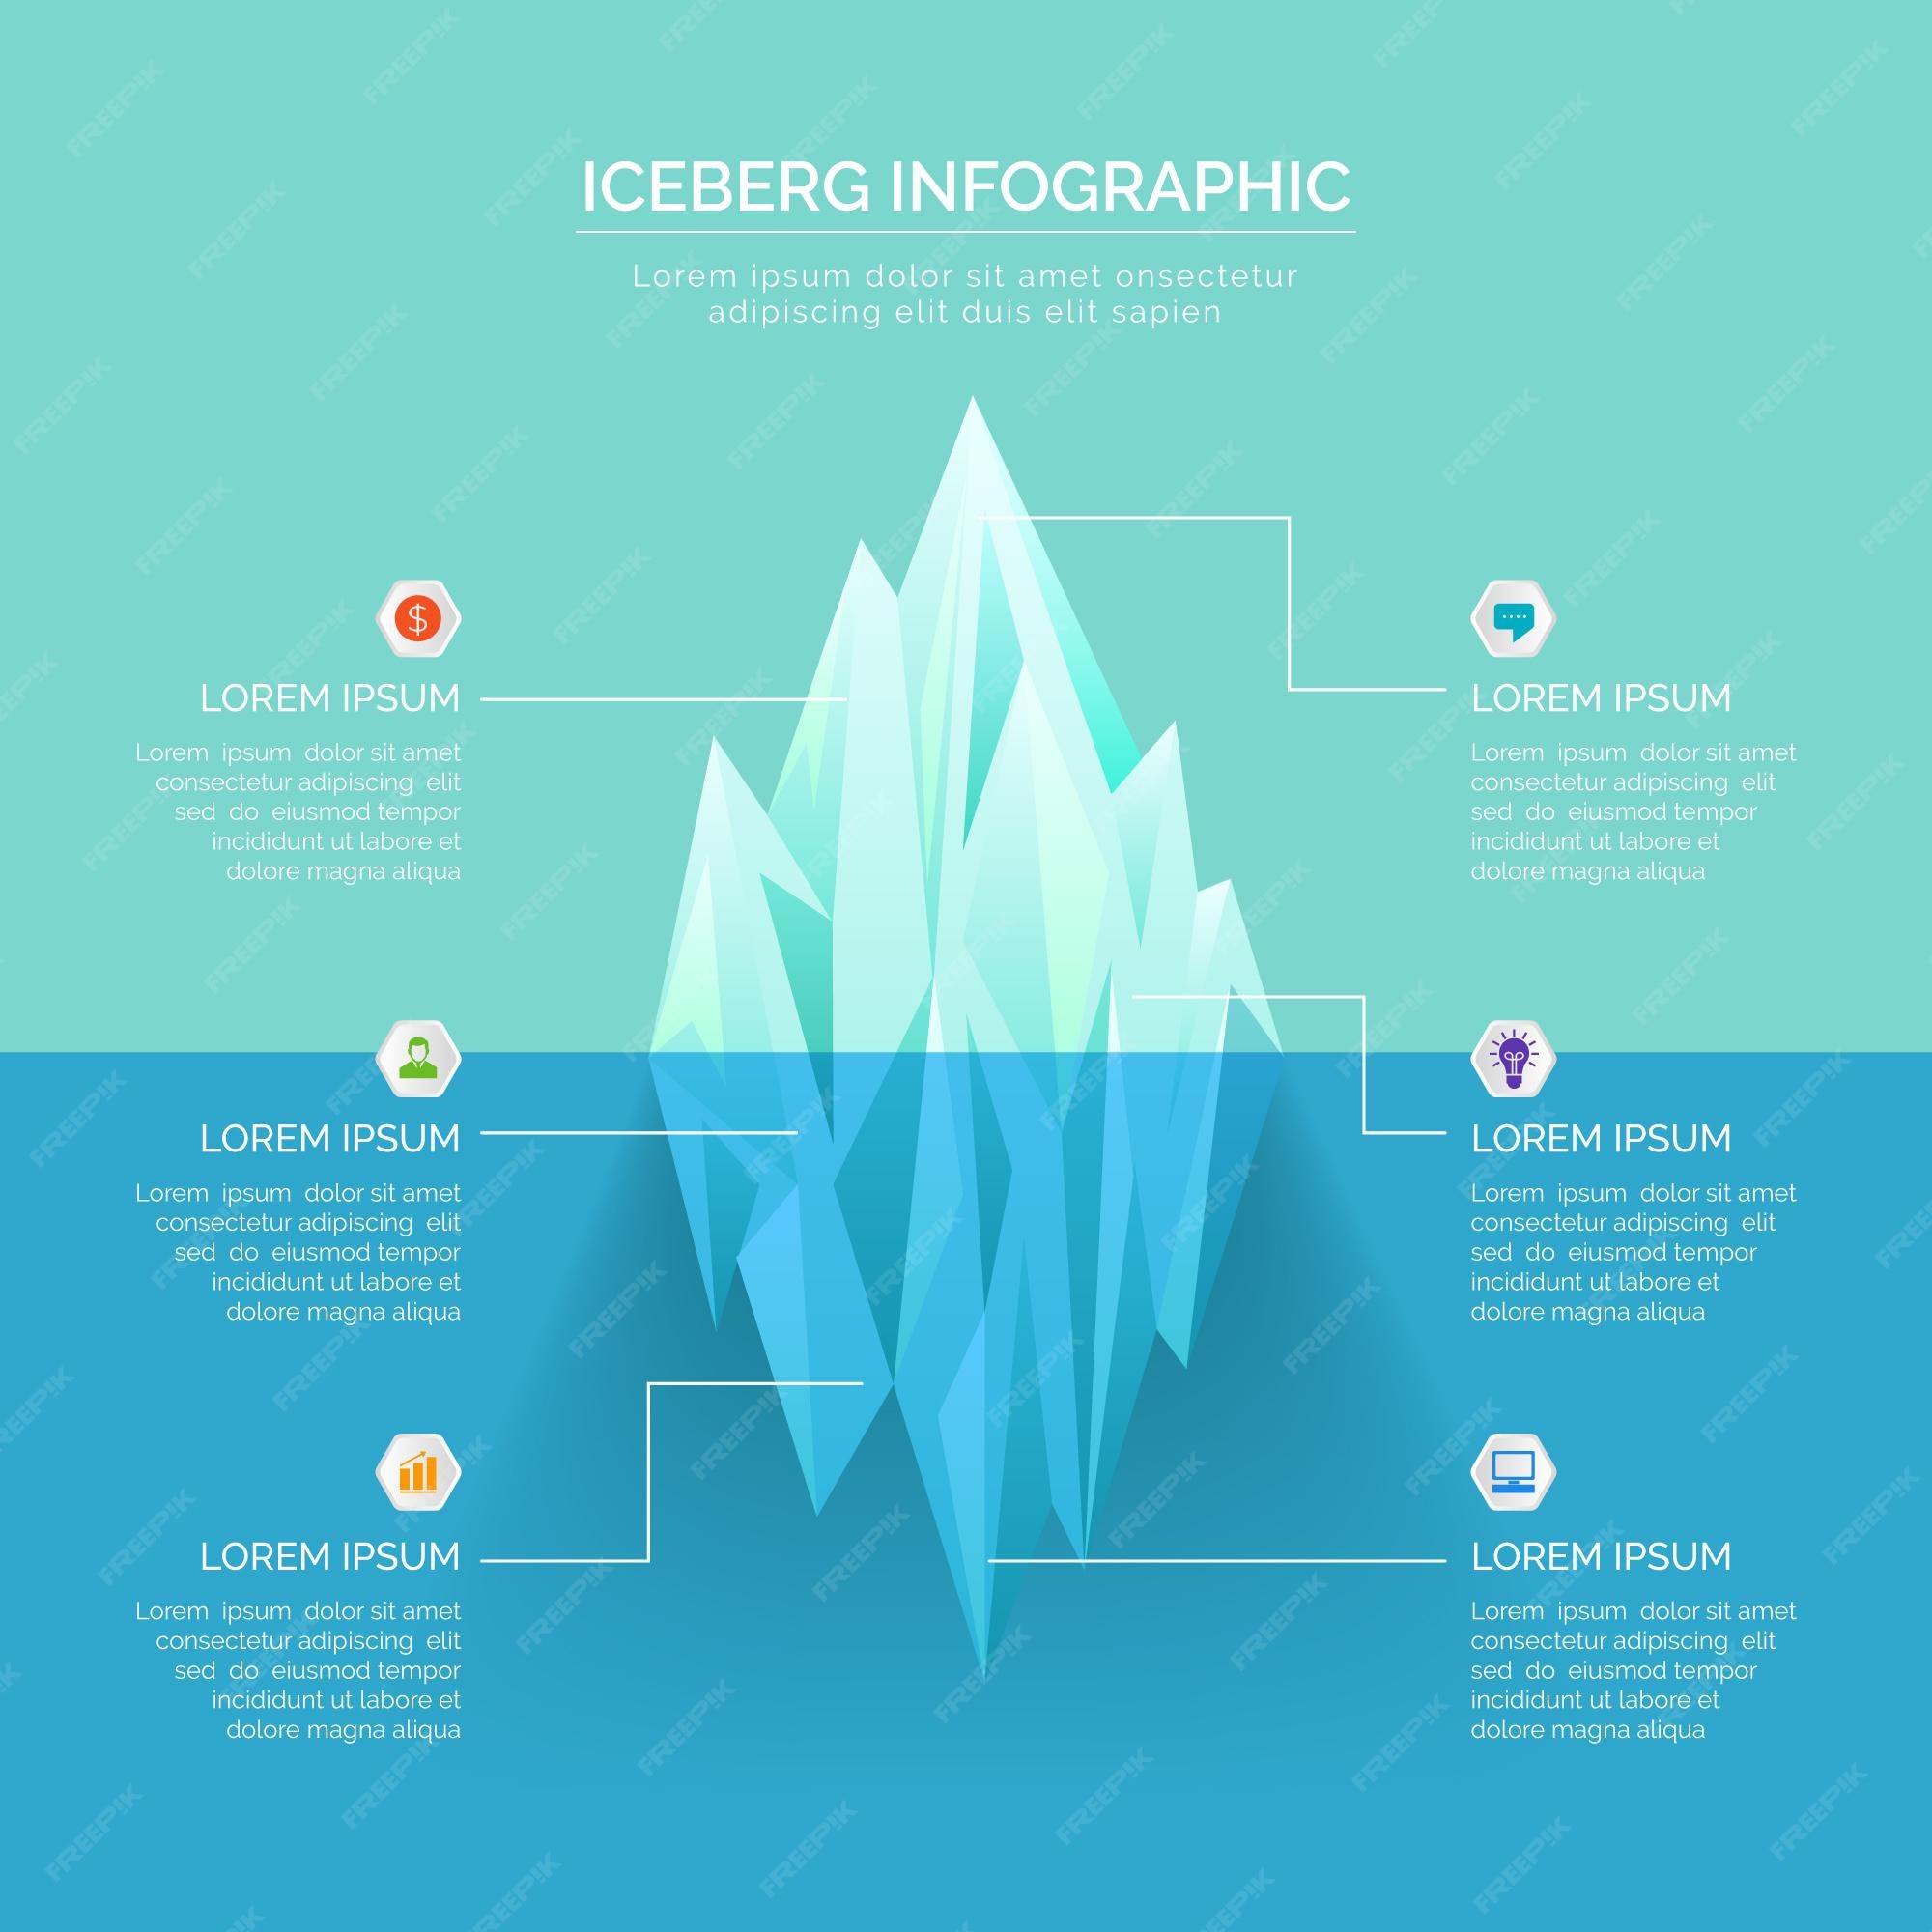 Free Vector Iceberg infographic template